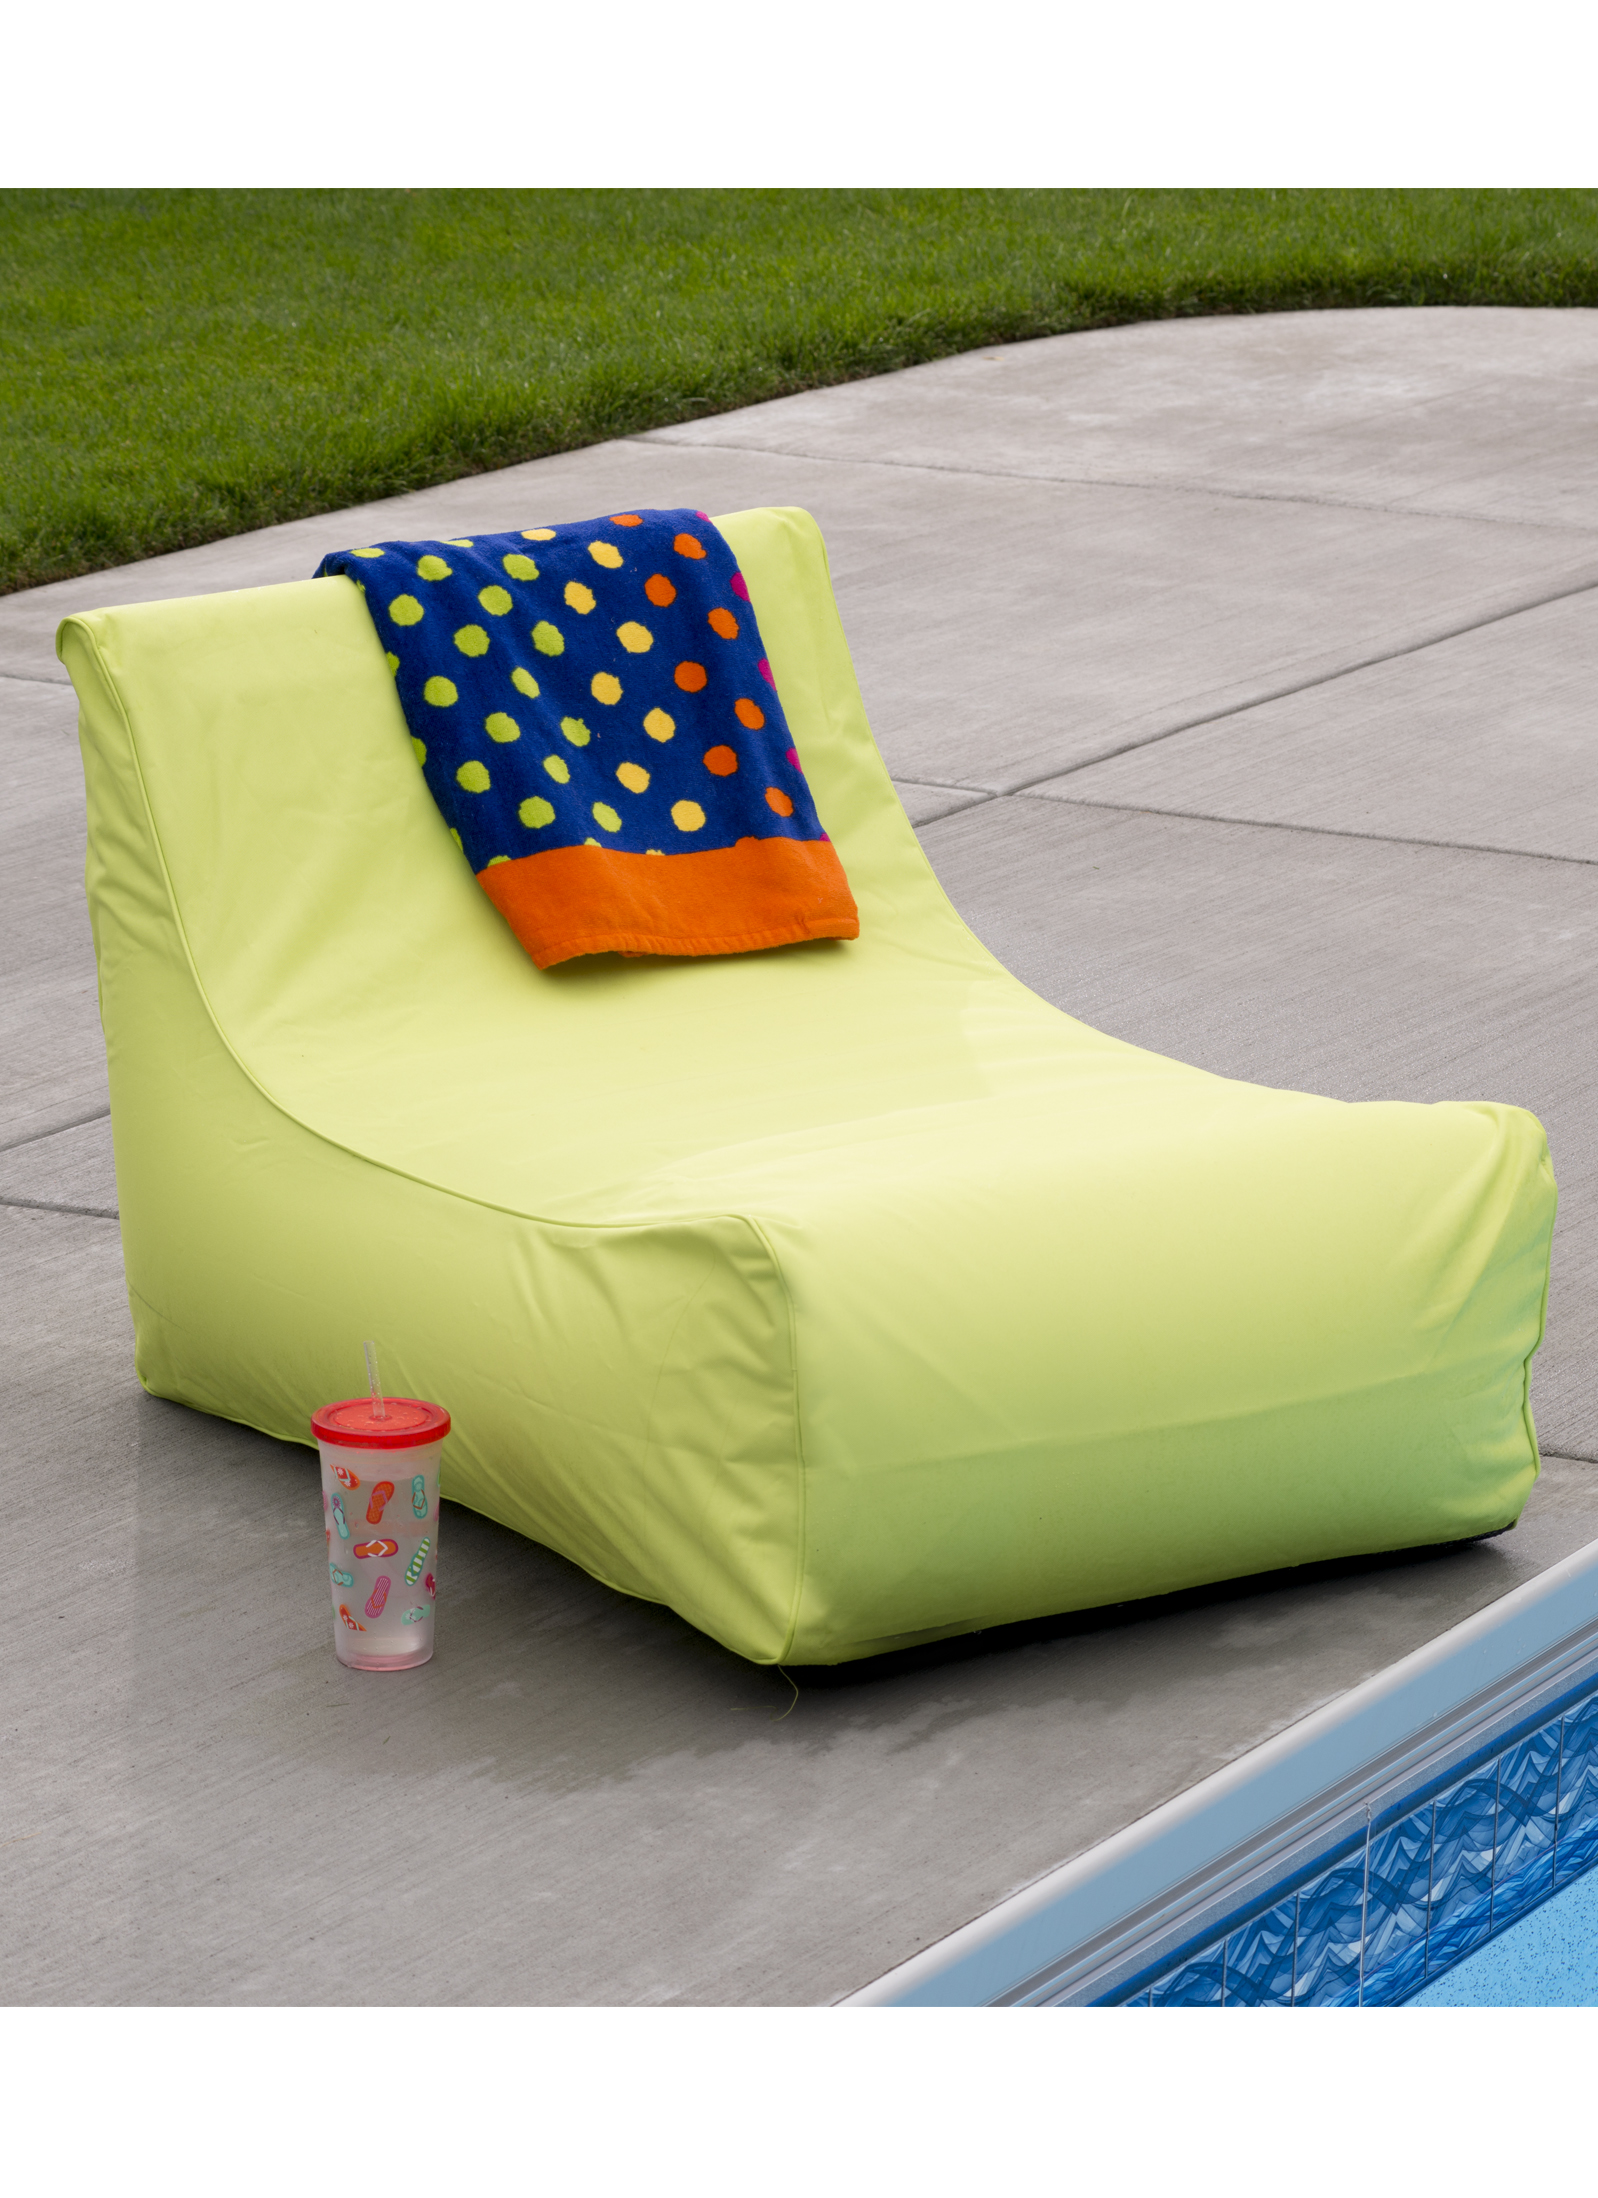 Aruba Inflatable Lounge Chair Lime - TOYS & GAMES